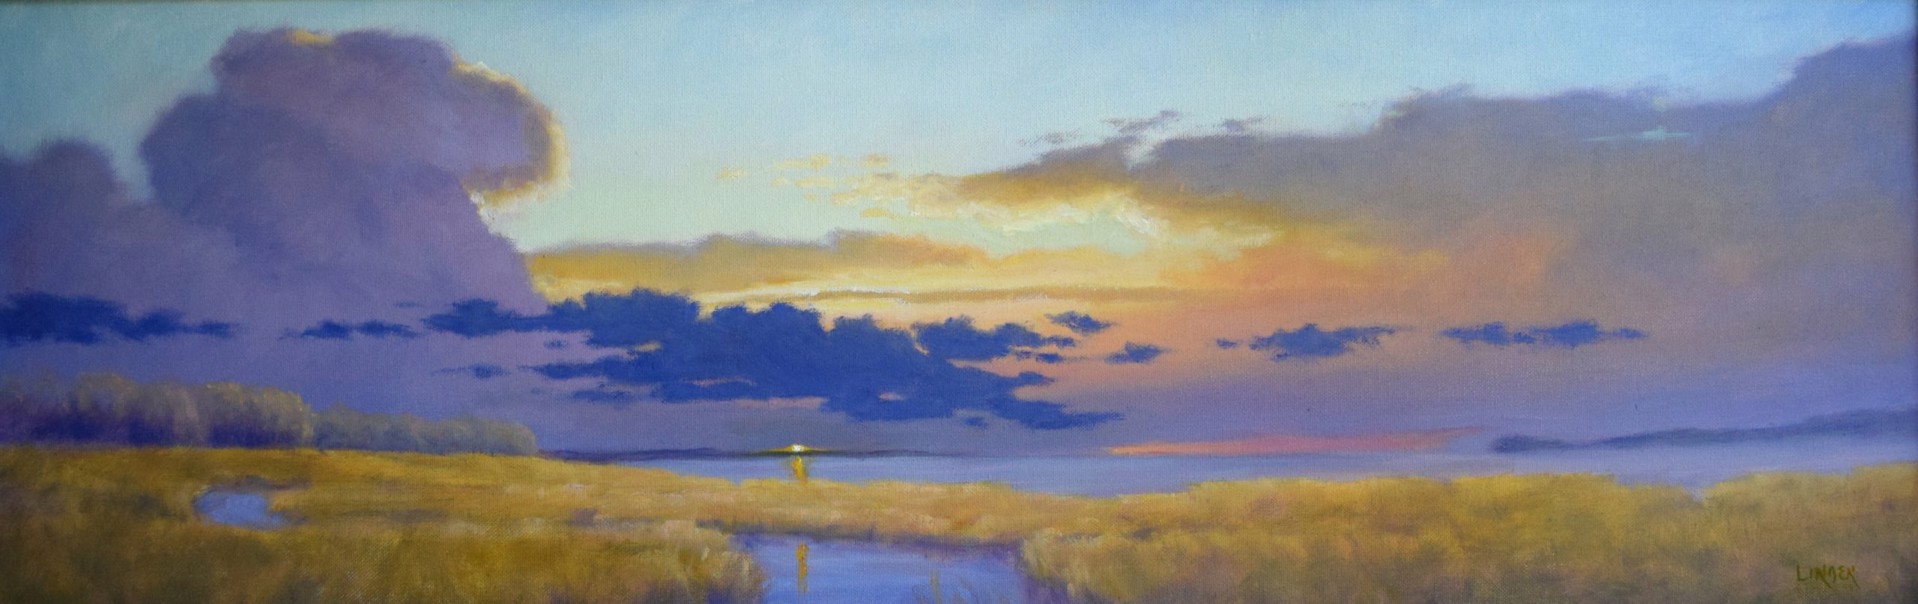 Quiet Over the Bay by Tom Linden